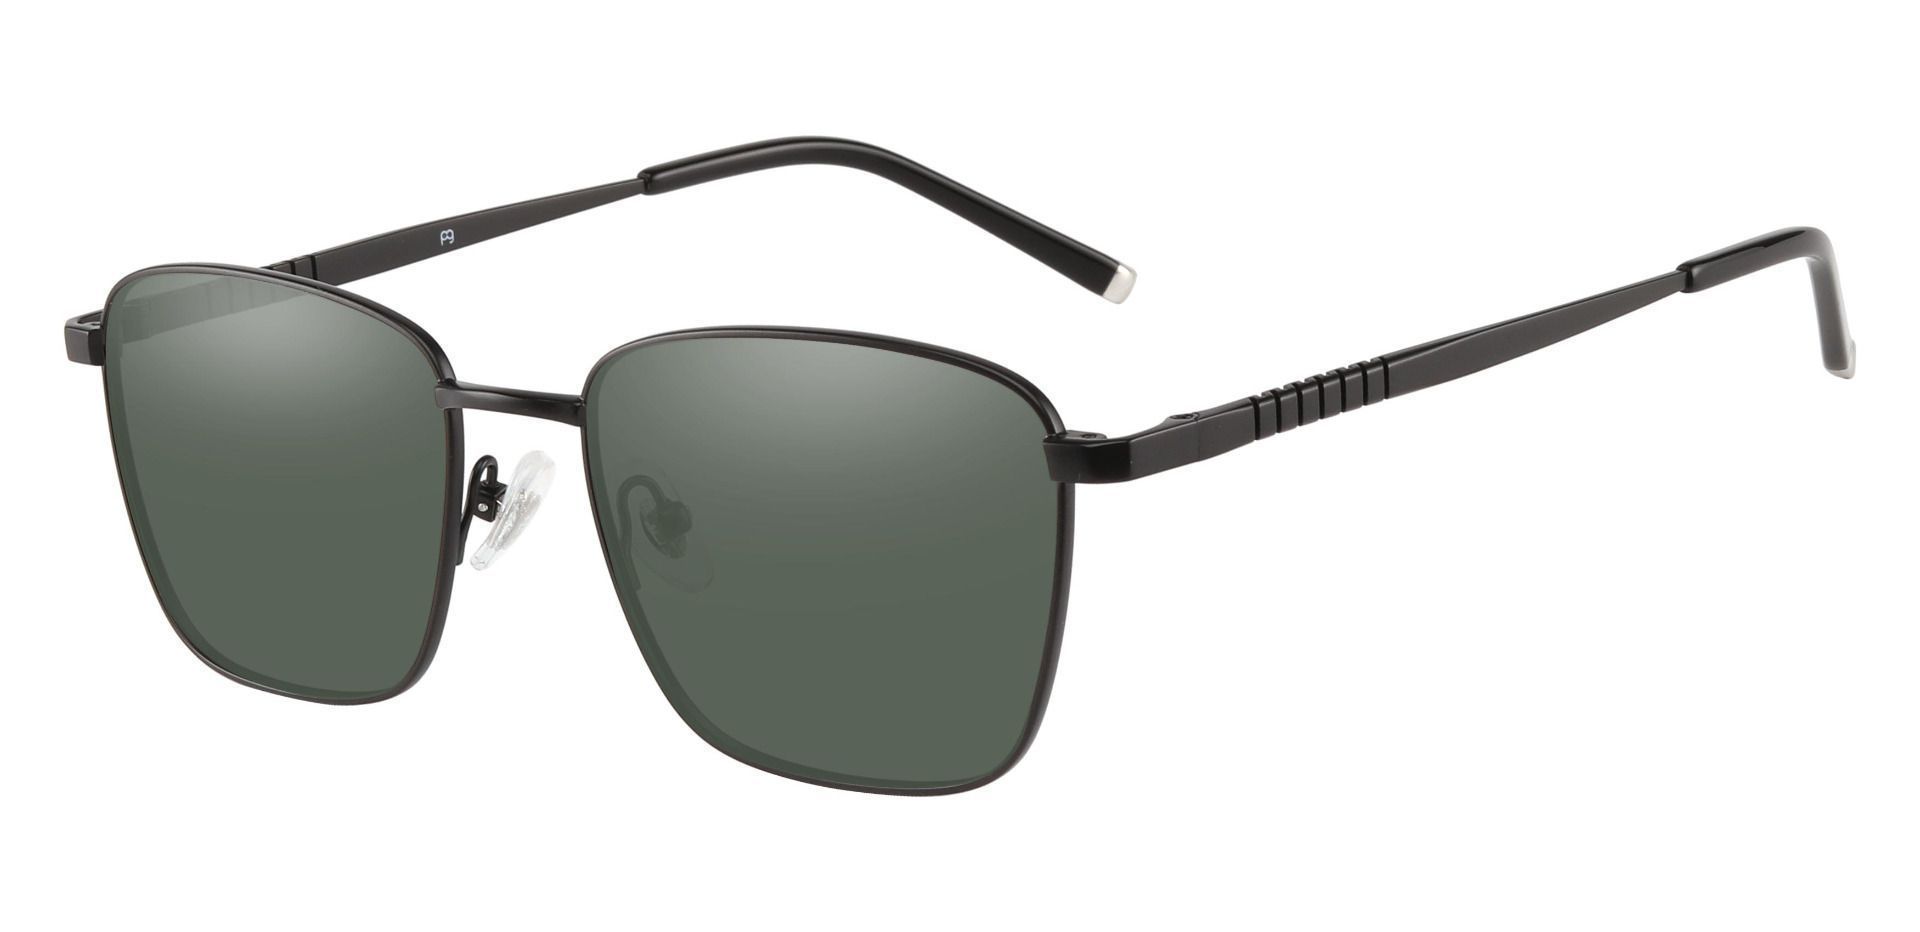 May Square Prescription Sunglasses - Black Frame With Green Lenses